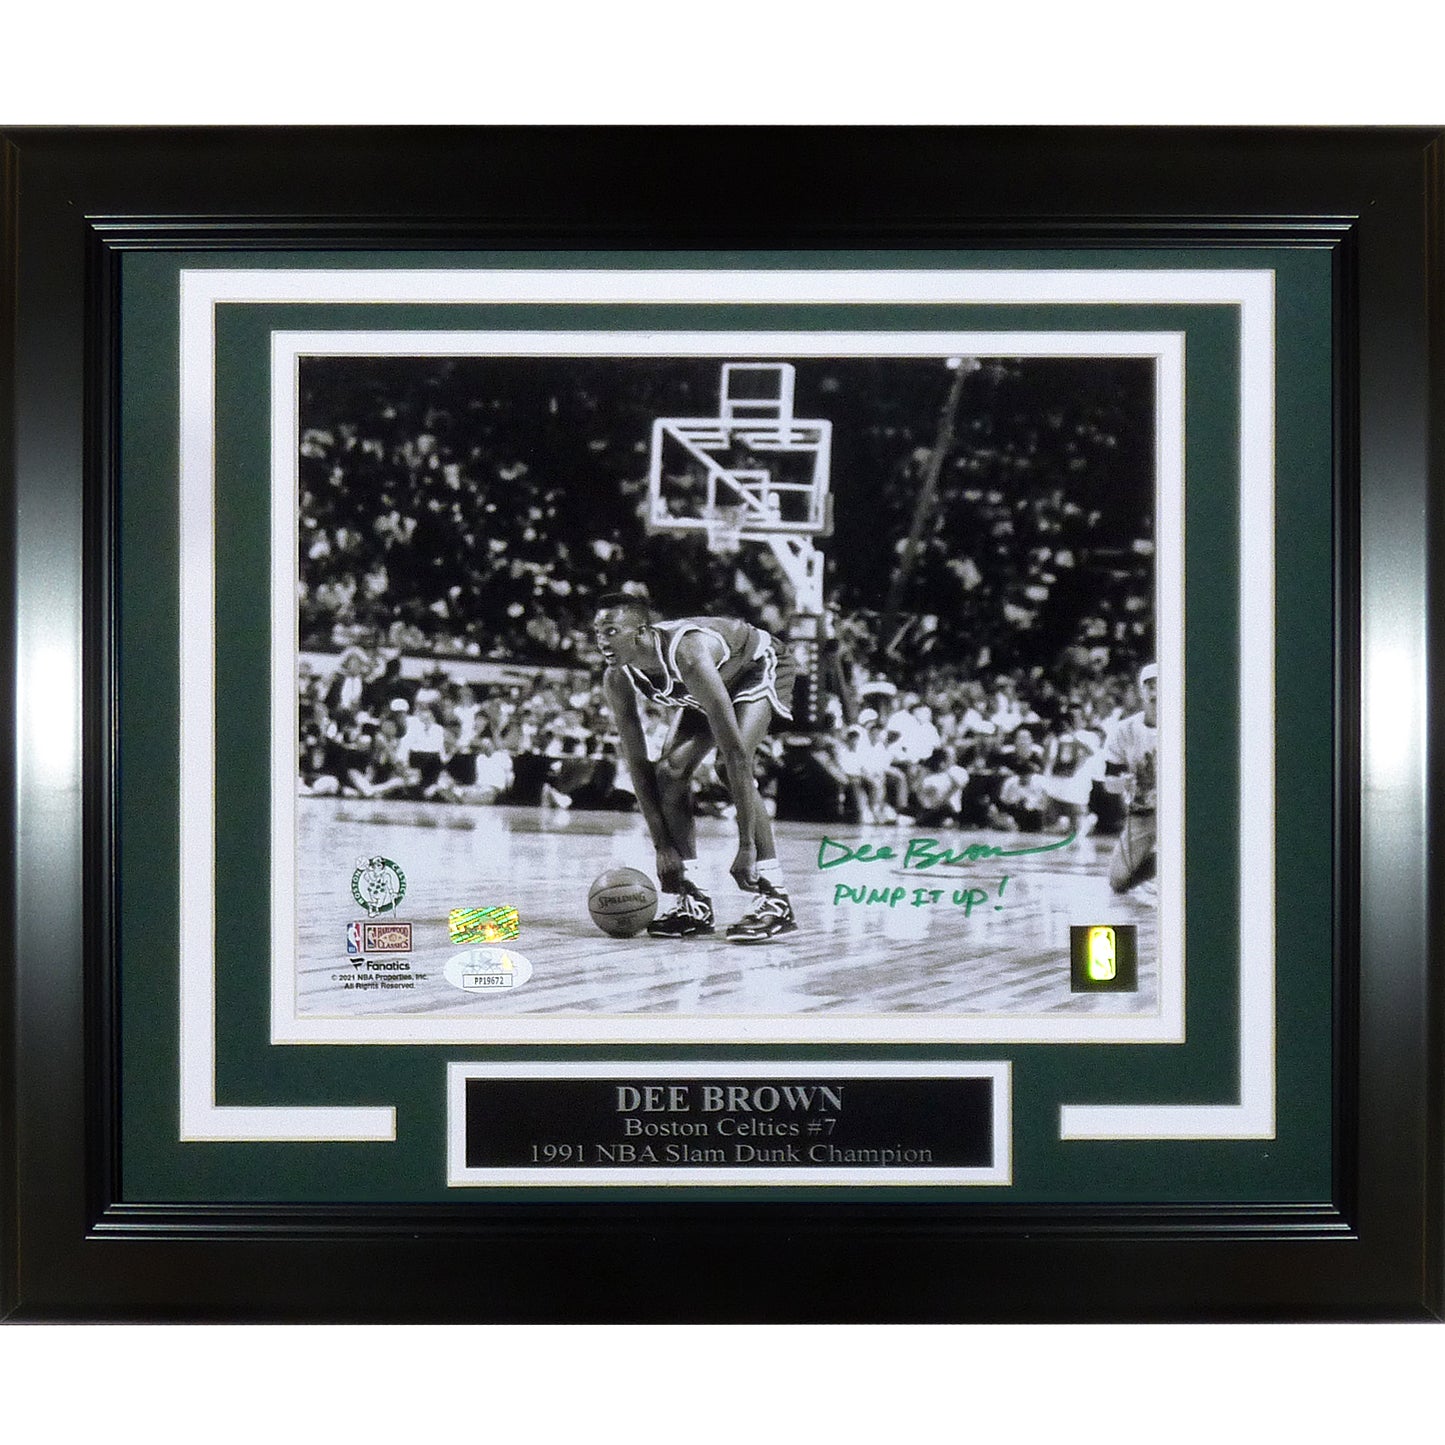 Dee Brown Autographed Boston Celtics (Pumping Reebok Shoes) Deluxe Framed 8x10 Photo w/ "Pump it Up" - JSA